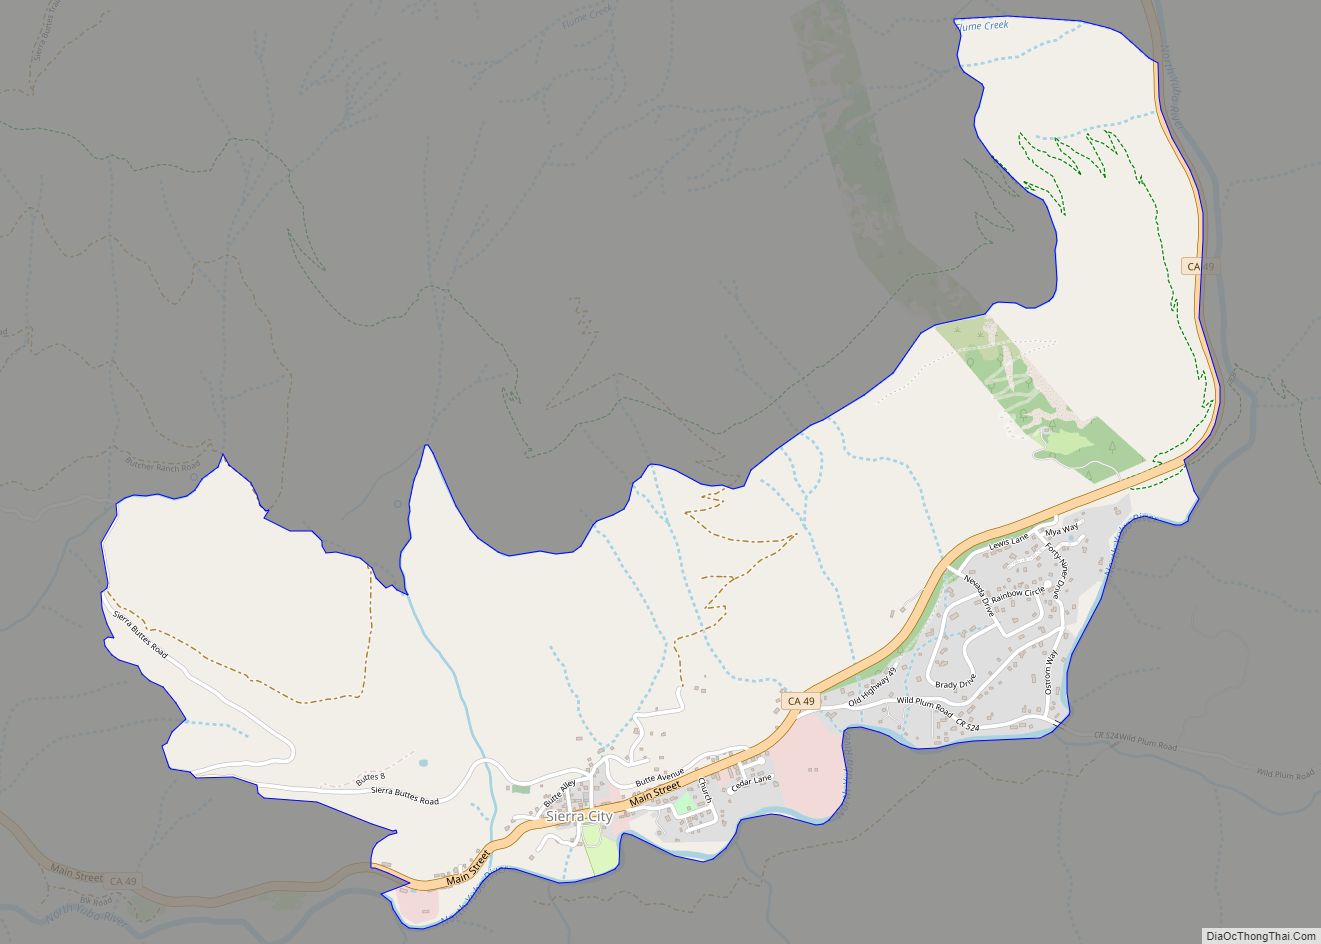 Map of Sierra City CDP